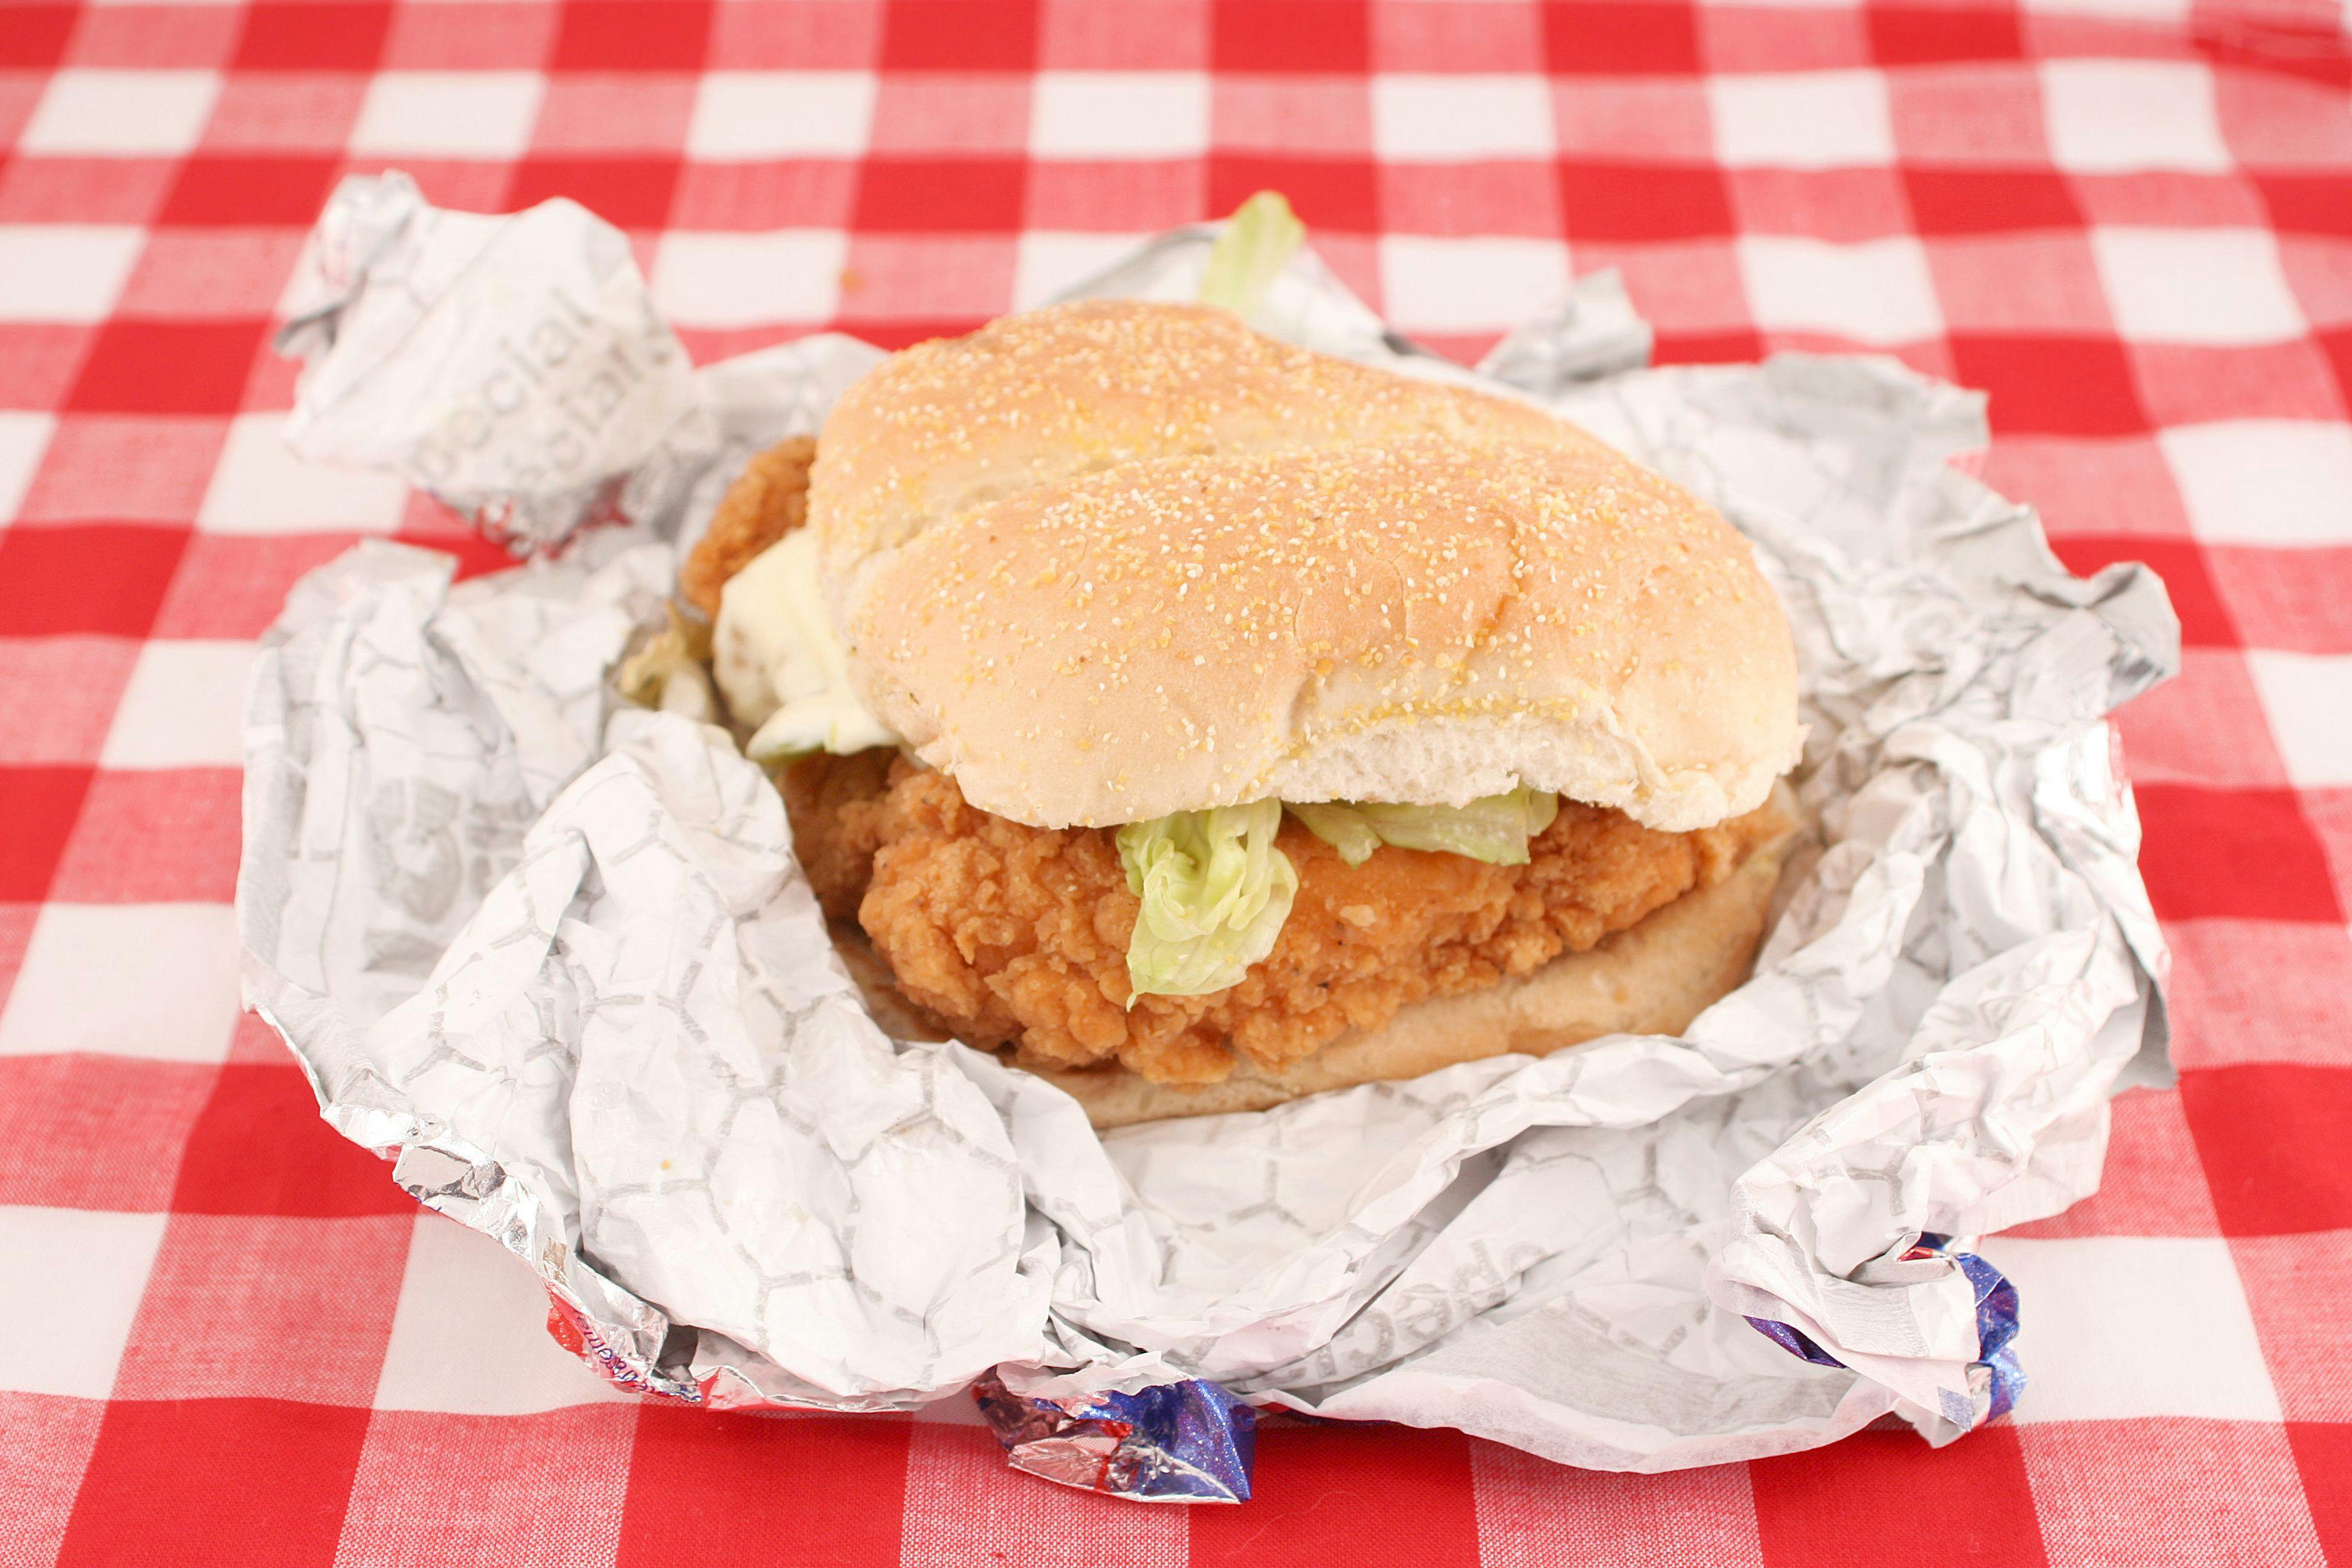 fast food crispy chicken burger still in wrapper | Image Credit: © GVictoria - stock.adobe.com